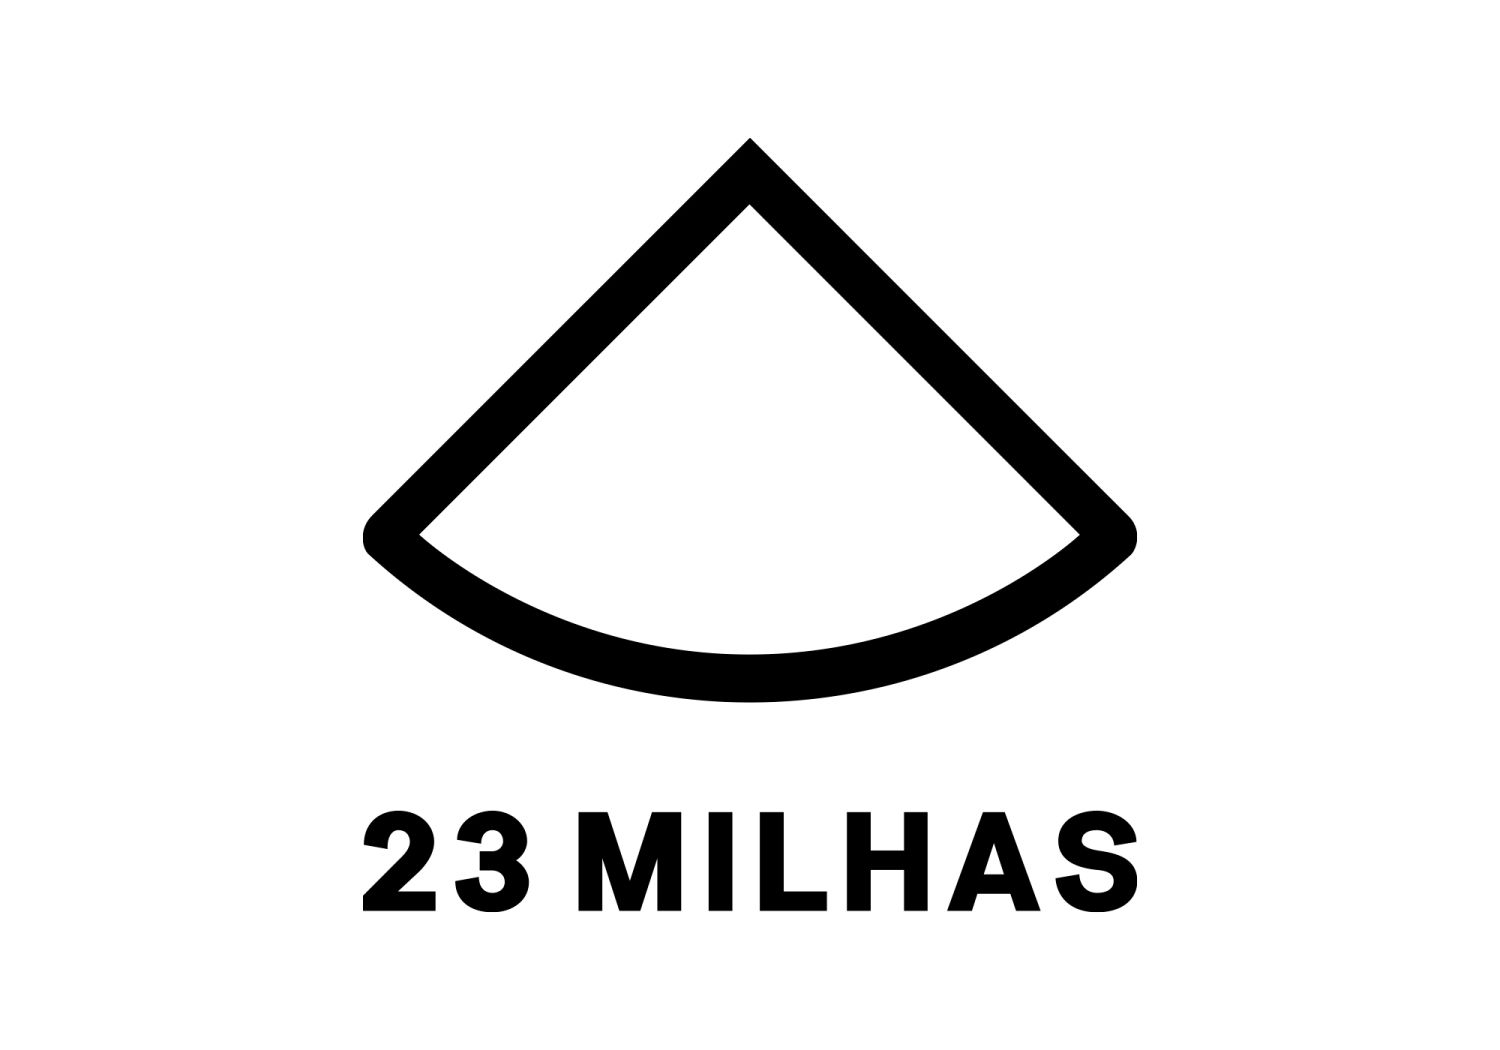 23 Milhas Image:1 23Milhas-01